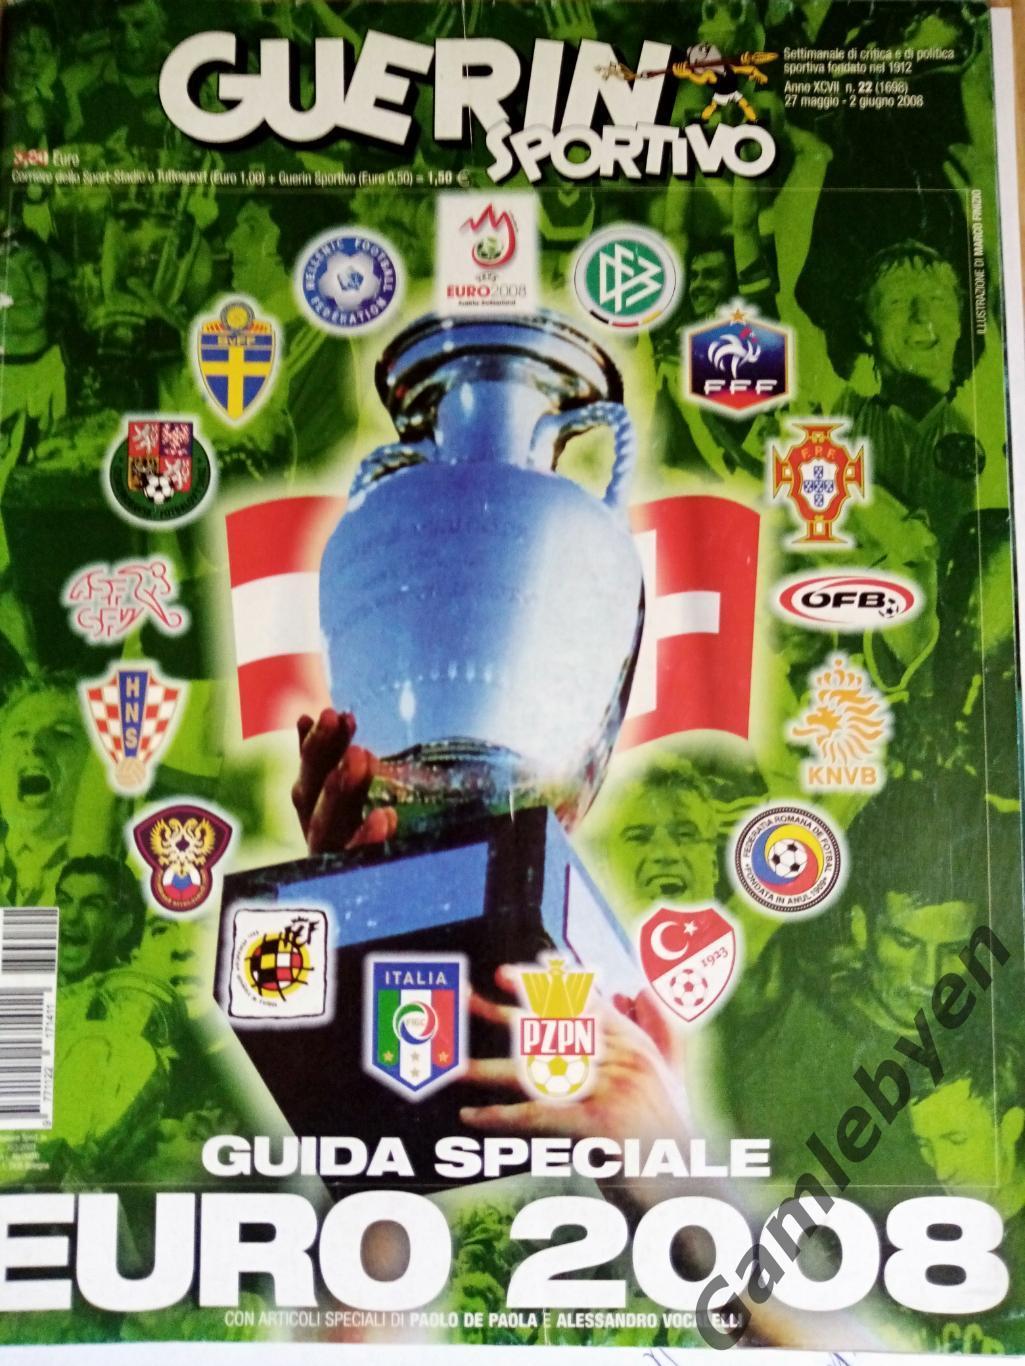 Guerin sportivo, выпуск, посвященный ЧЕ-2008